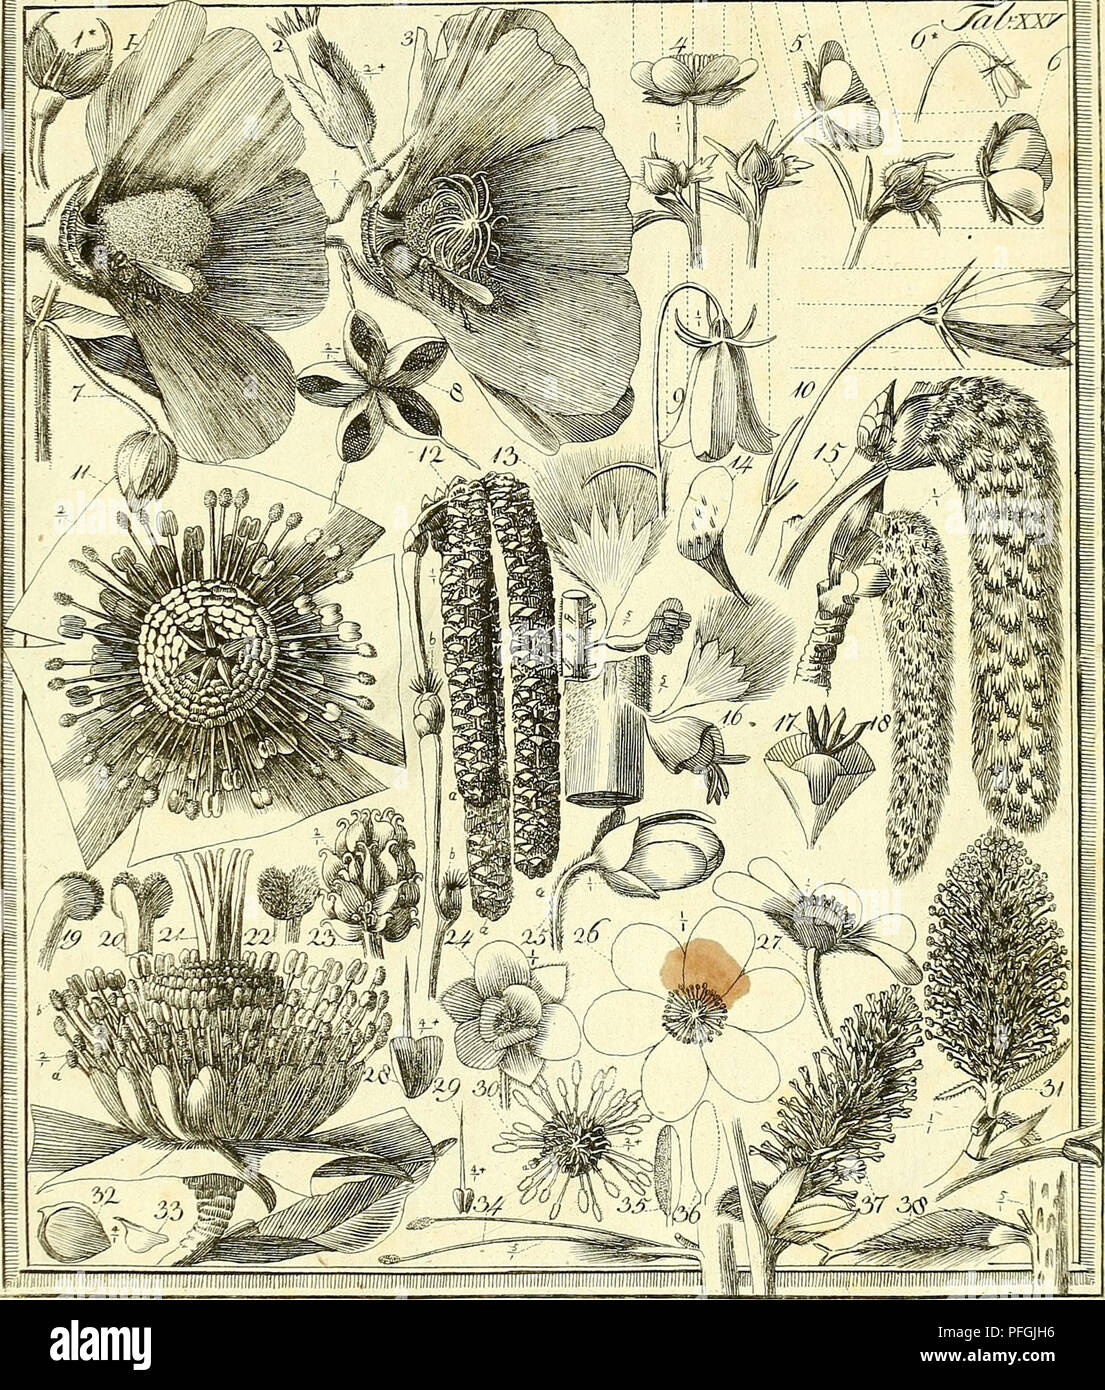 . Das entdeckte Geheimniss der Natur im Bau und in der Befruchtung der Blumen. Botany; Flowers; Fertilization of plants. piiiMiiHiiiiiiiM :mmmmmmmmmmiimmÂ§ â xxr. F; 'â'&quot;-&quot;rnmmmmwMmmmMmmMMMmmMMmti*. Please note that these images are extracted from scanned page images that may have been digitally enhanced for readability - coloration and appearance of these illustrations may not perfectly resemble the original work.. Sprengel, Christian Konrad, 1750-1816; Capieux, Johann Stephan, 1748-1813, engraver; JÃ¤ck, C. (Carl), engraver; Arndt, Wilhelm, 1750-1813, engraver; Wohlgemuth, A. , Stock Photo